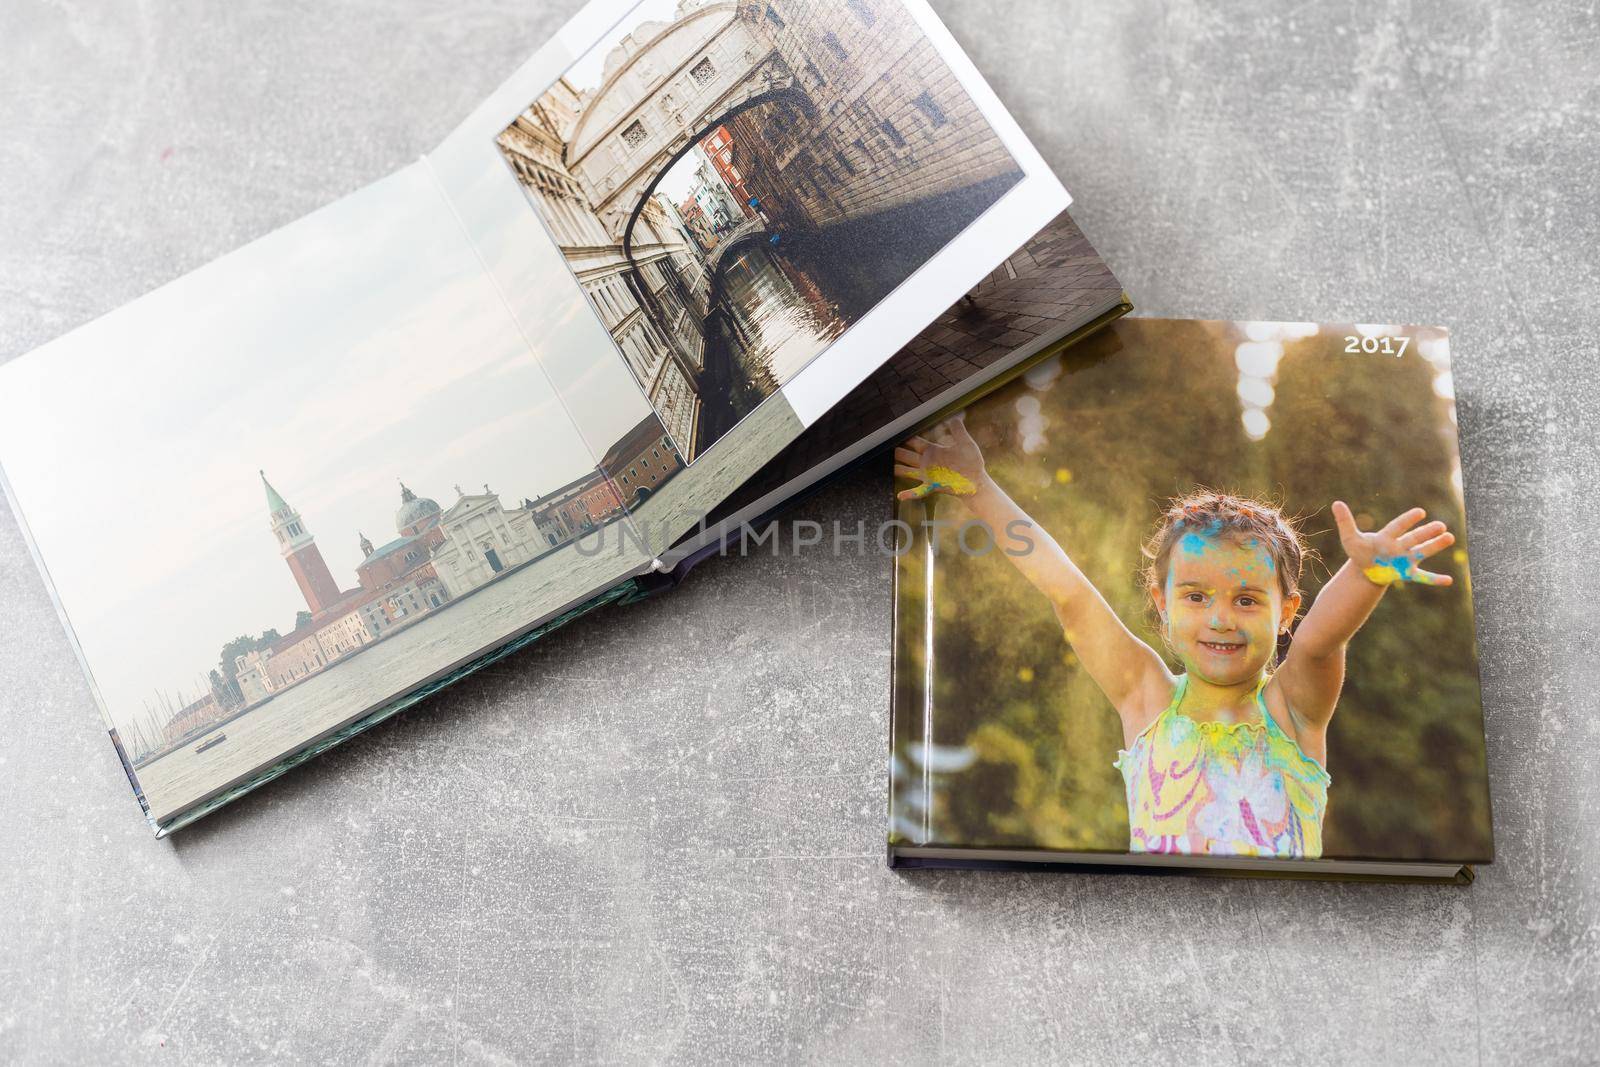 Photobook Album with Travel Photo on Table.